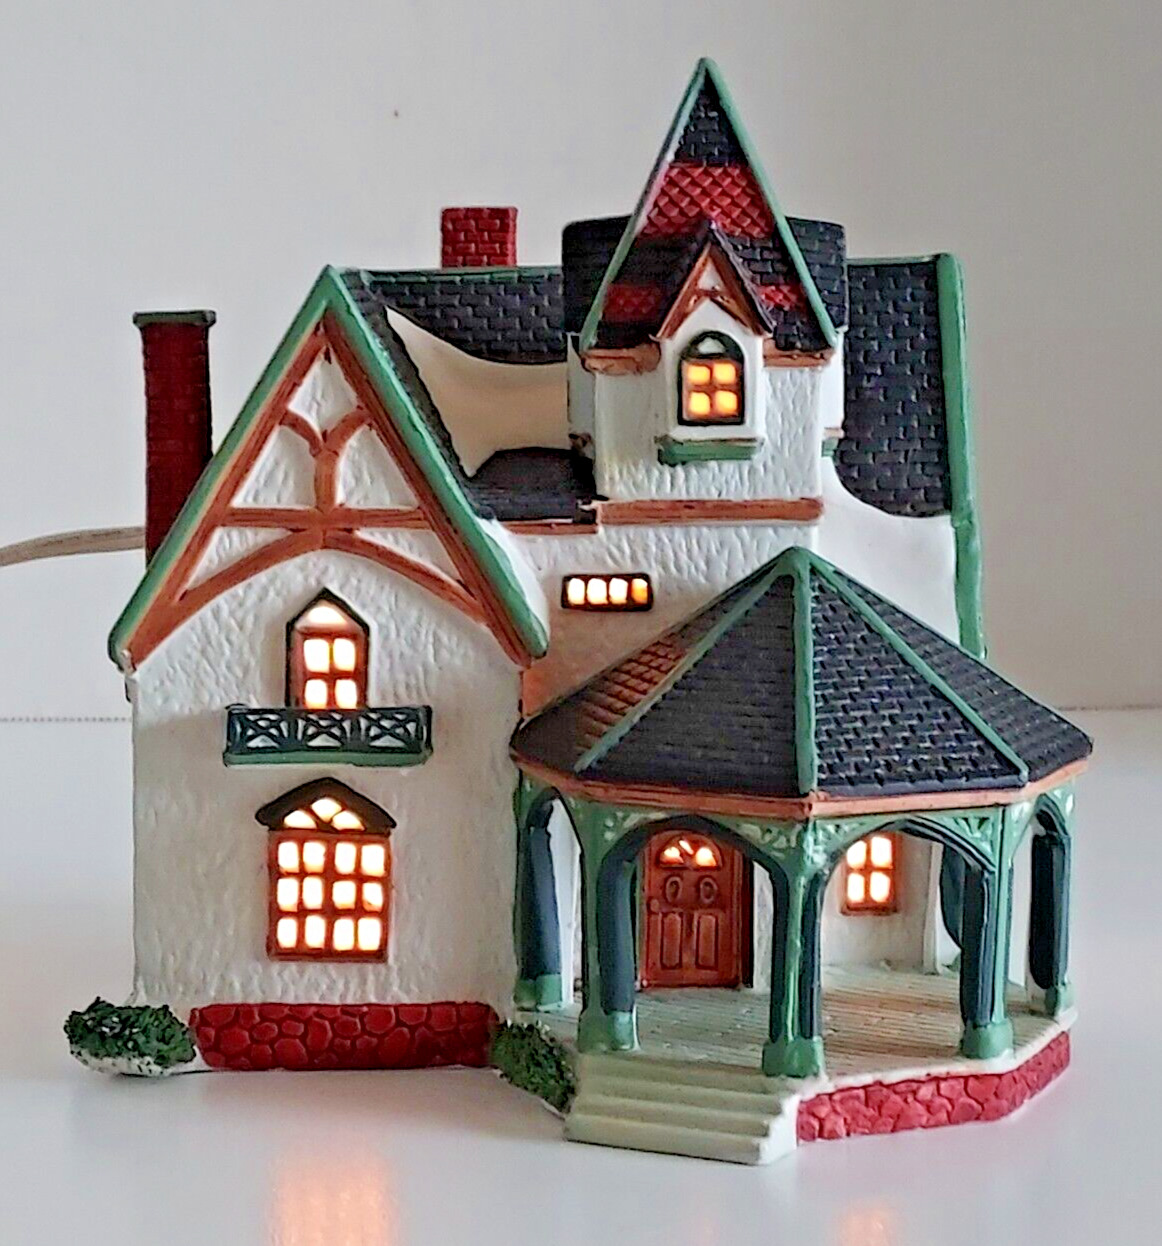 1996 Lemax Caddington Village Porcelain Lighted House #65219 Vintage - In Box